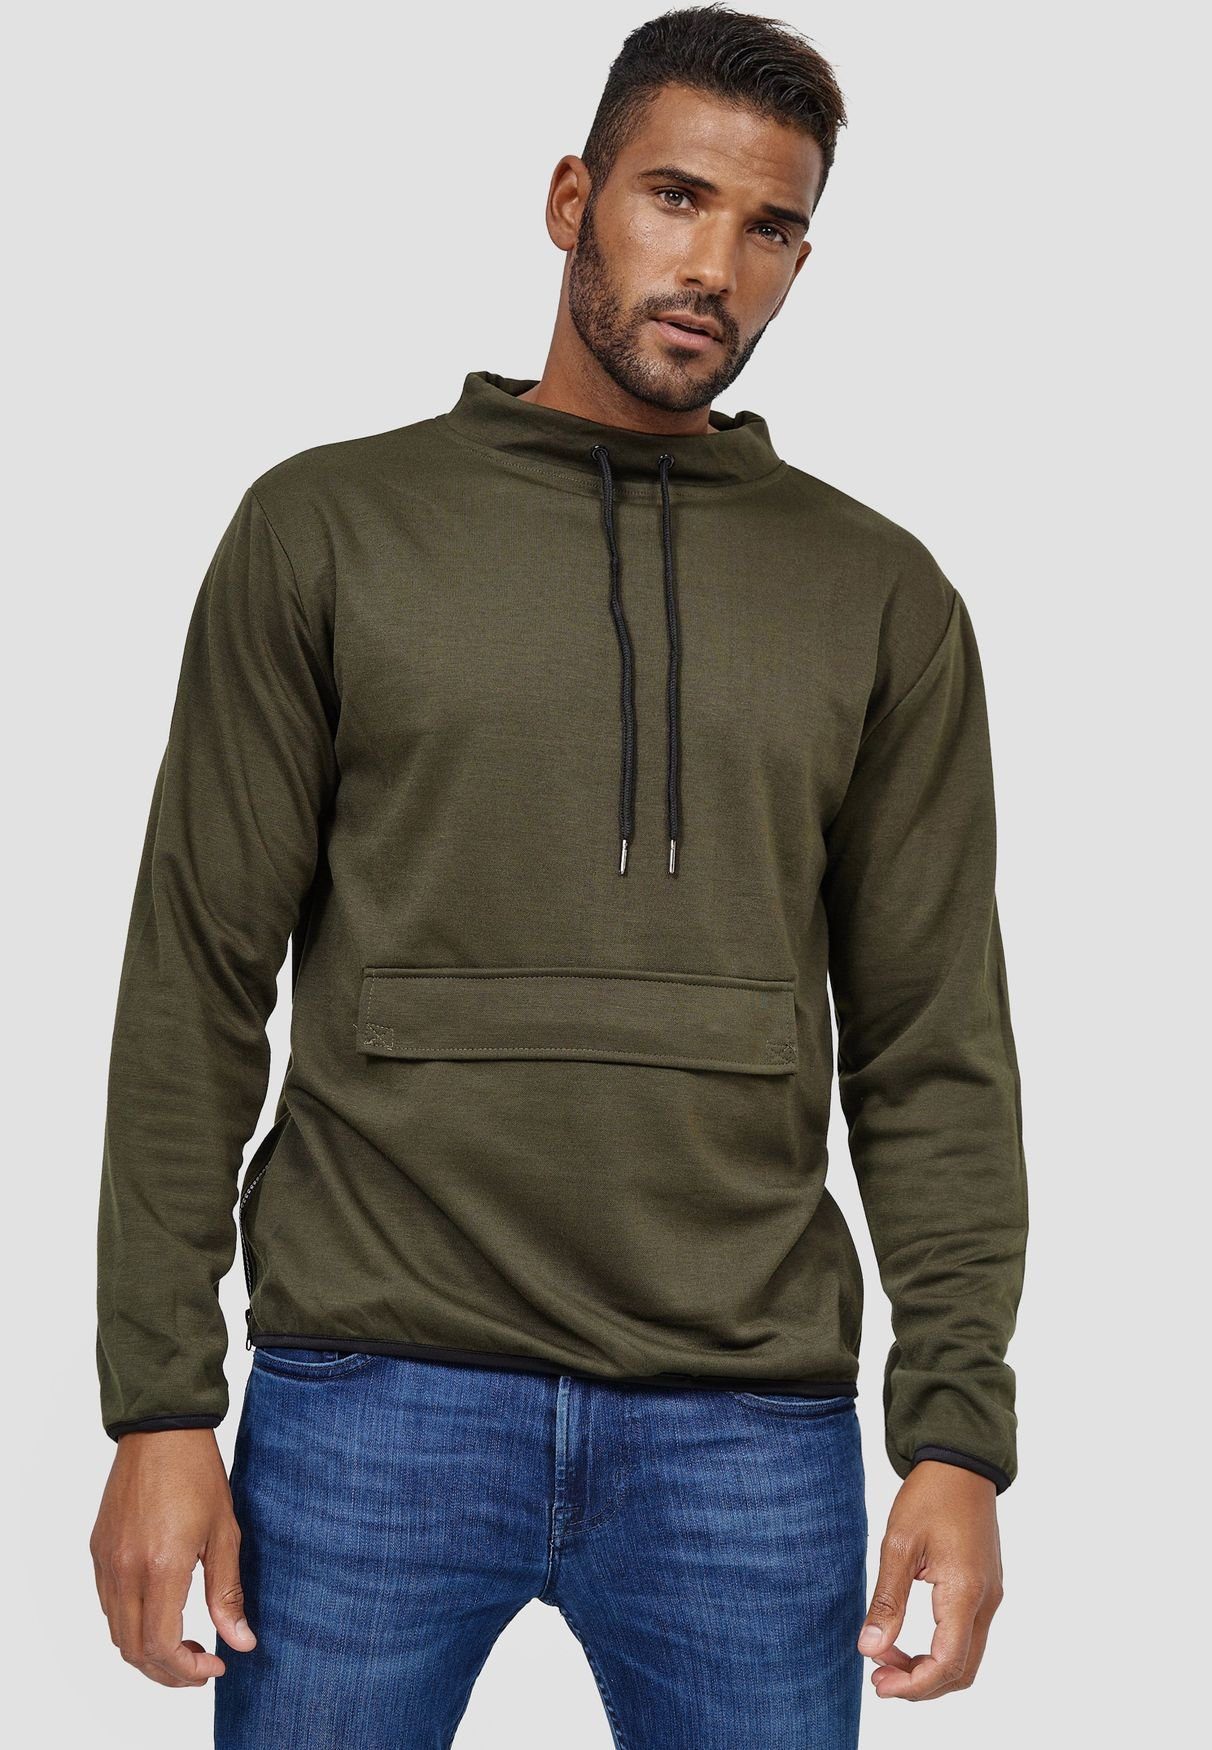 BLACK FRIDAY - Egomaxx Sweatshirt »Herren Longsleeve Sweater Sport  Sweatshirt Pullover Zip Bauchtasche« (1-tlg) 3842 in Khaki kaufen | OTTO